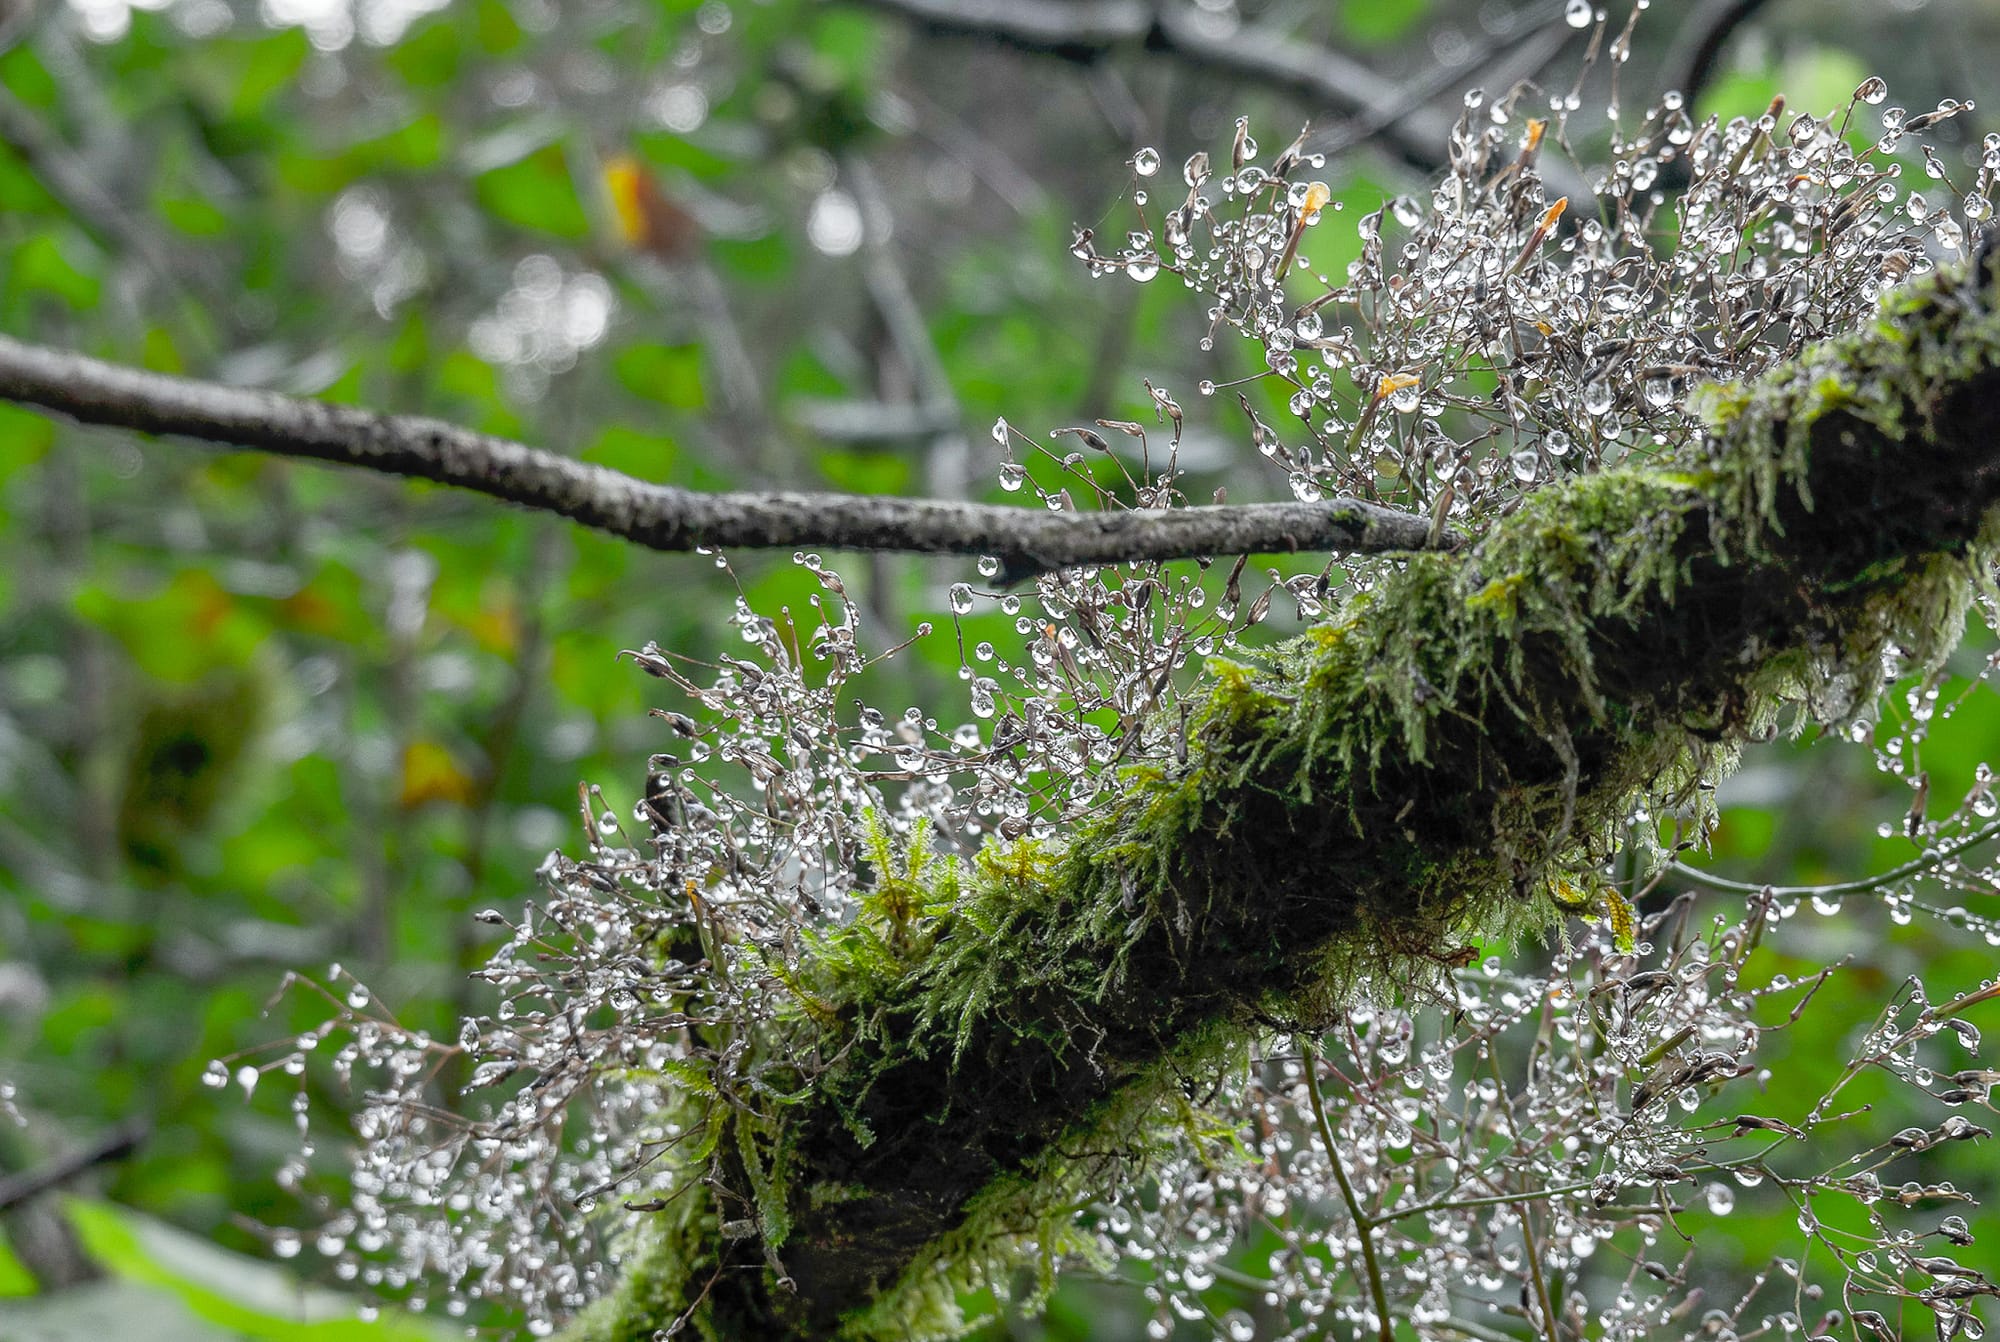 dewdrops on mossy branch